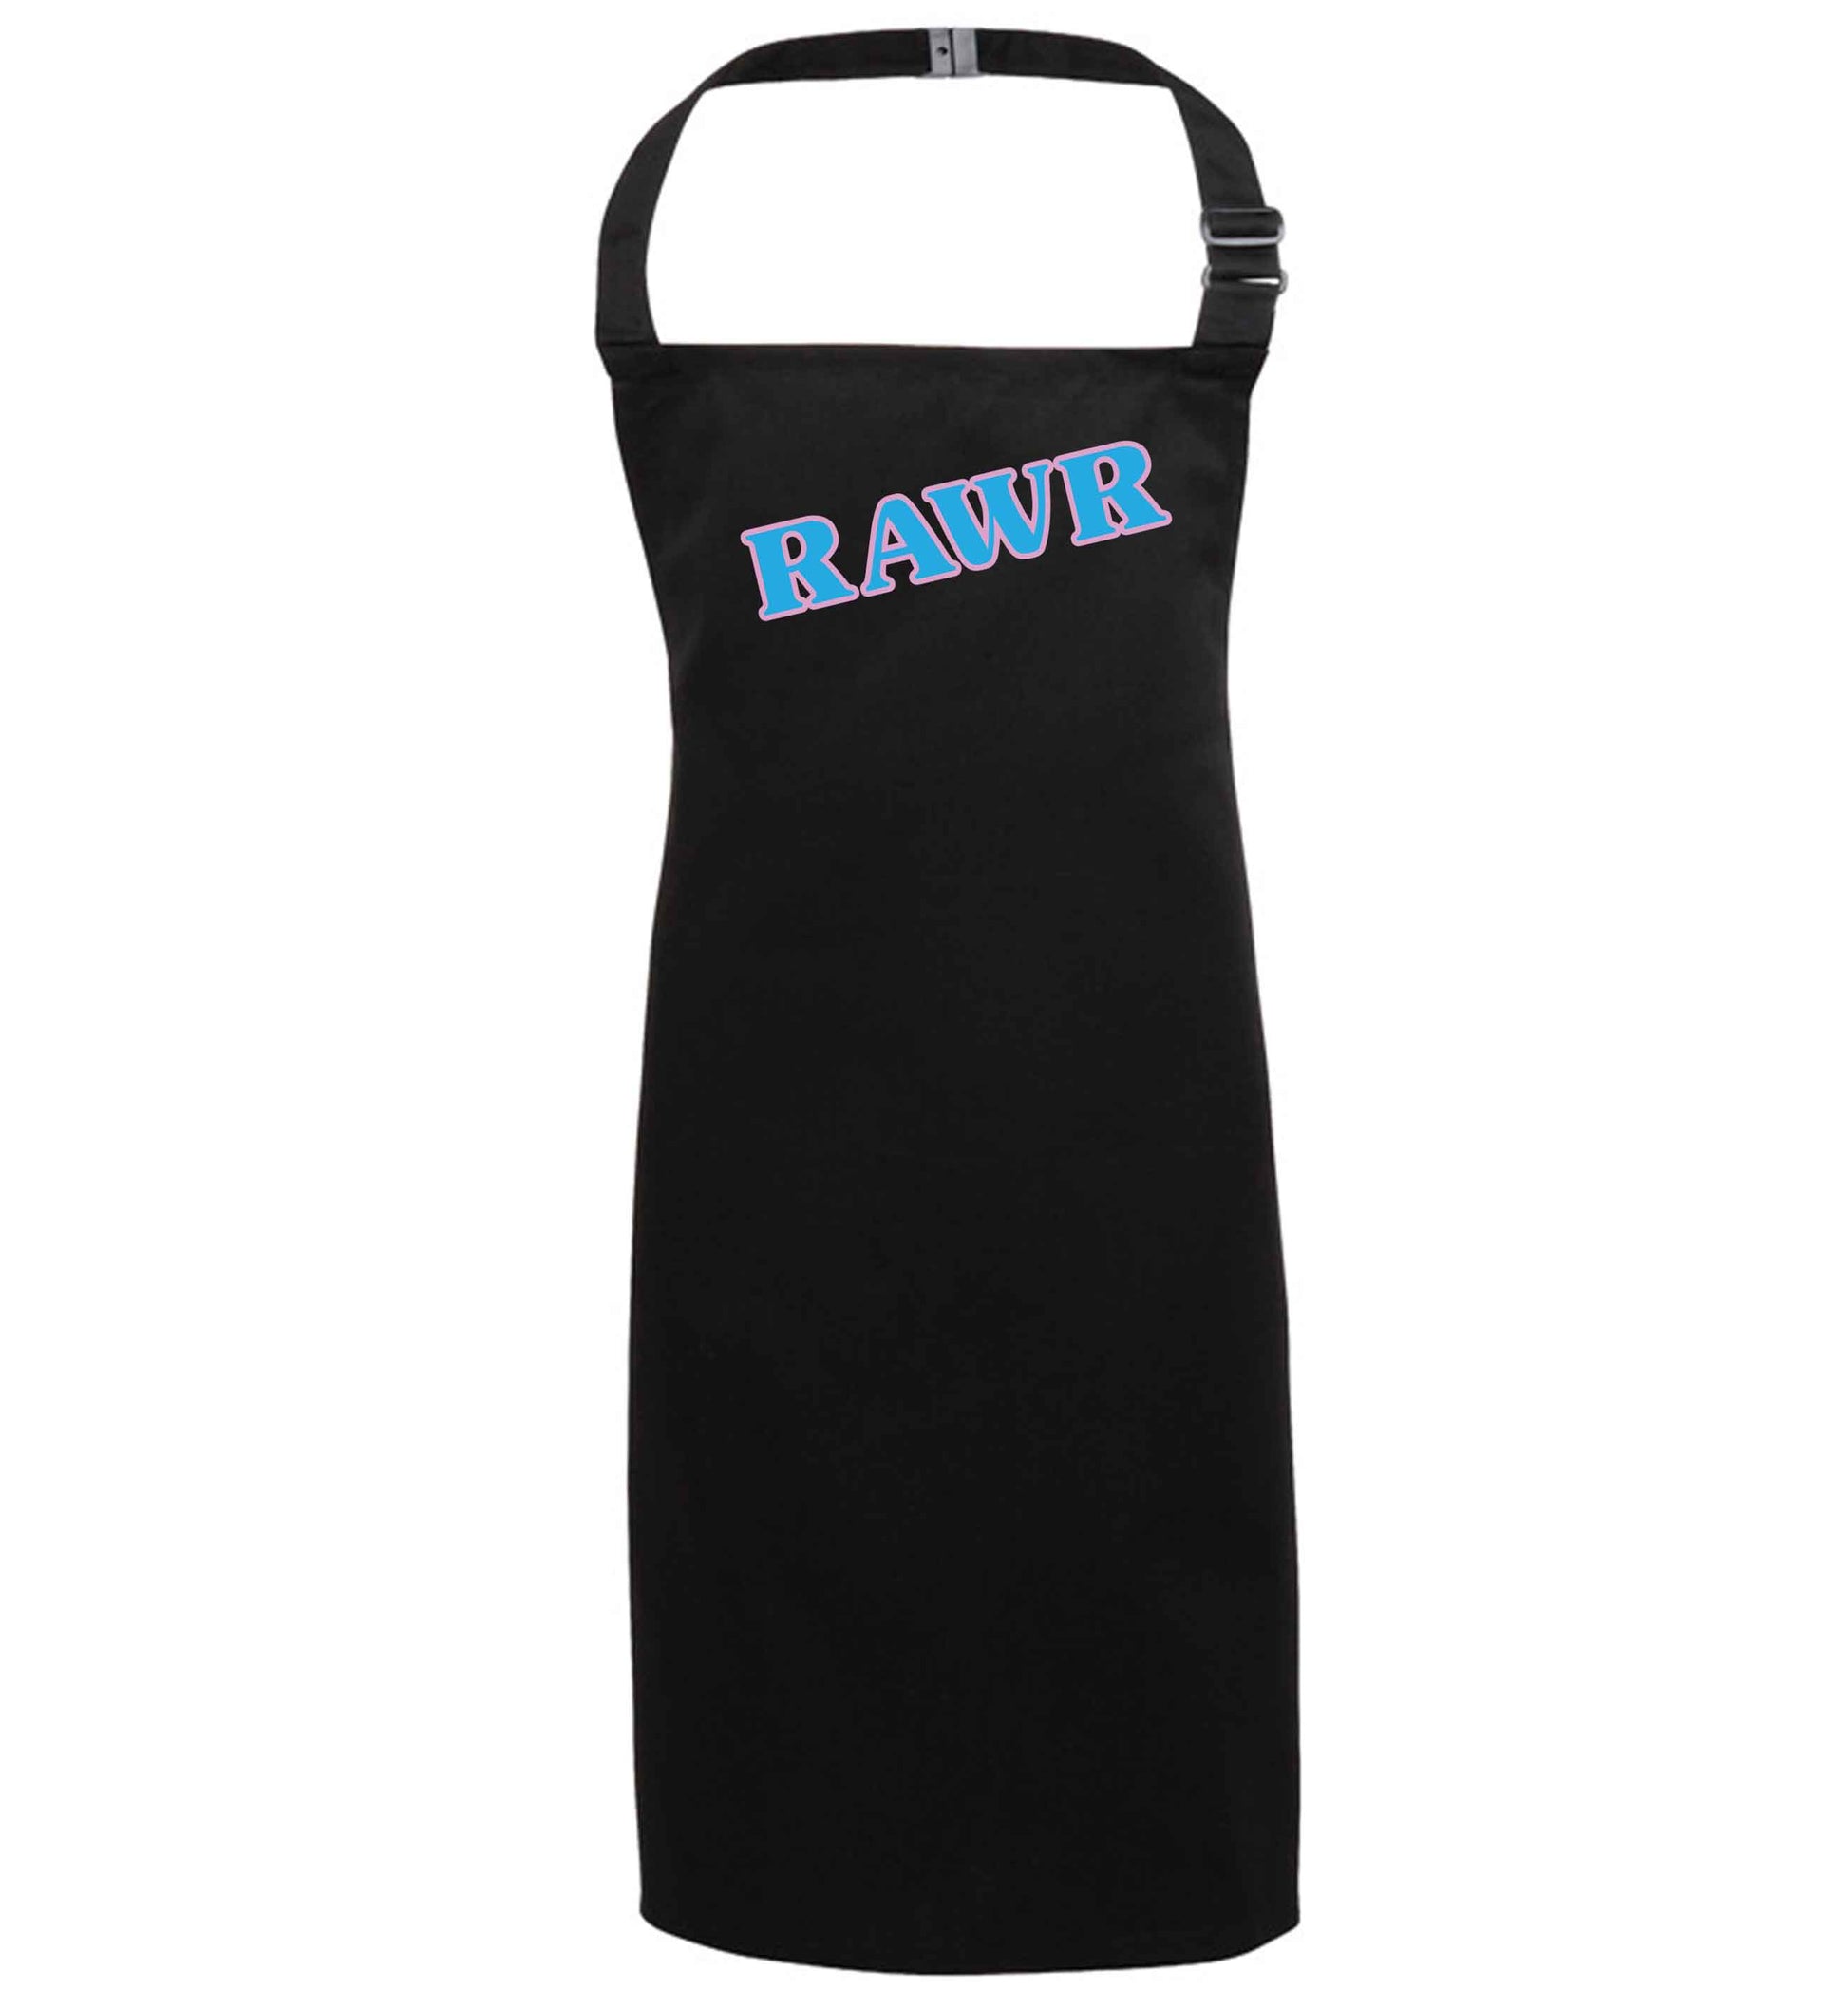 Rawr black apron 7-10 years